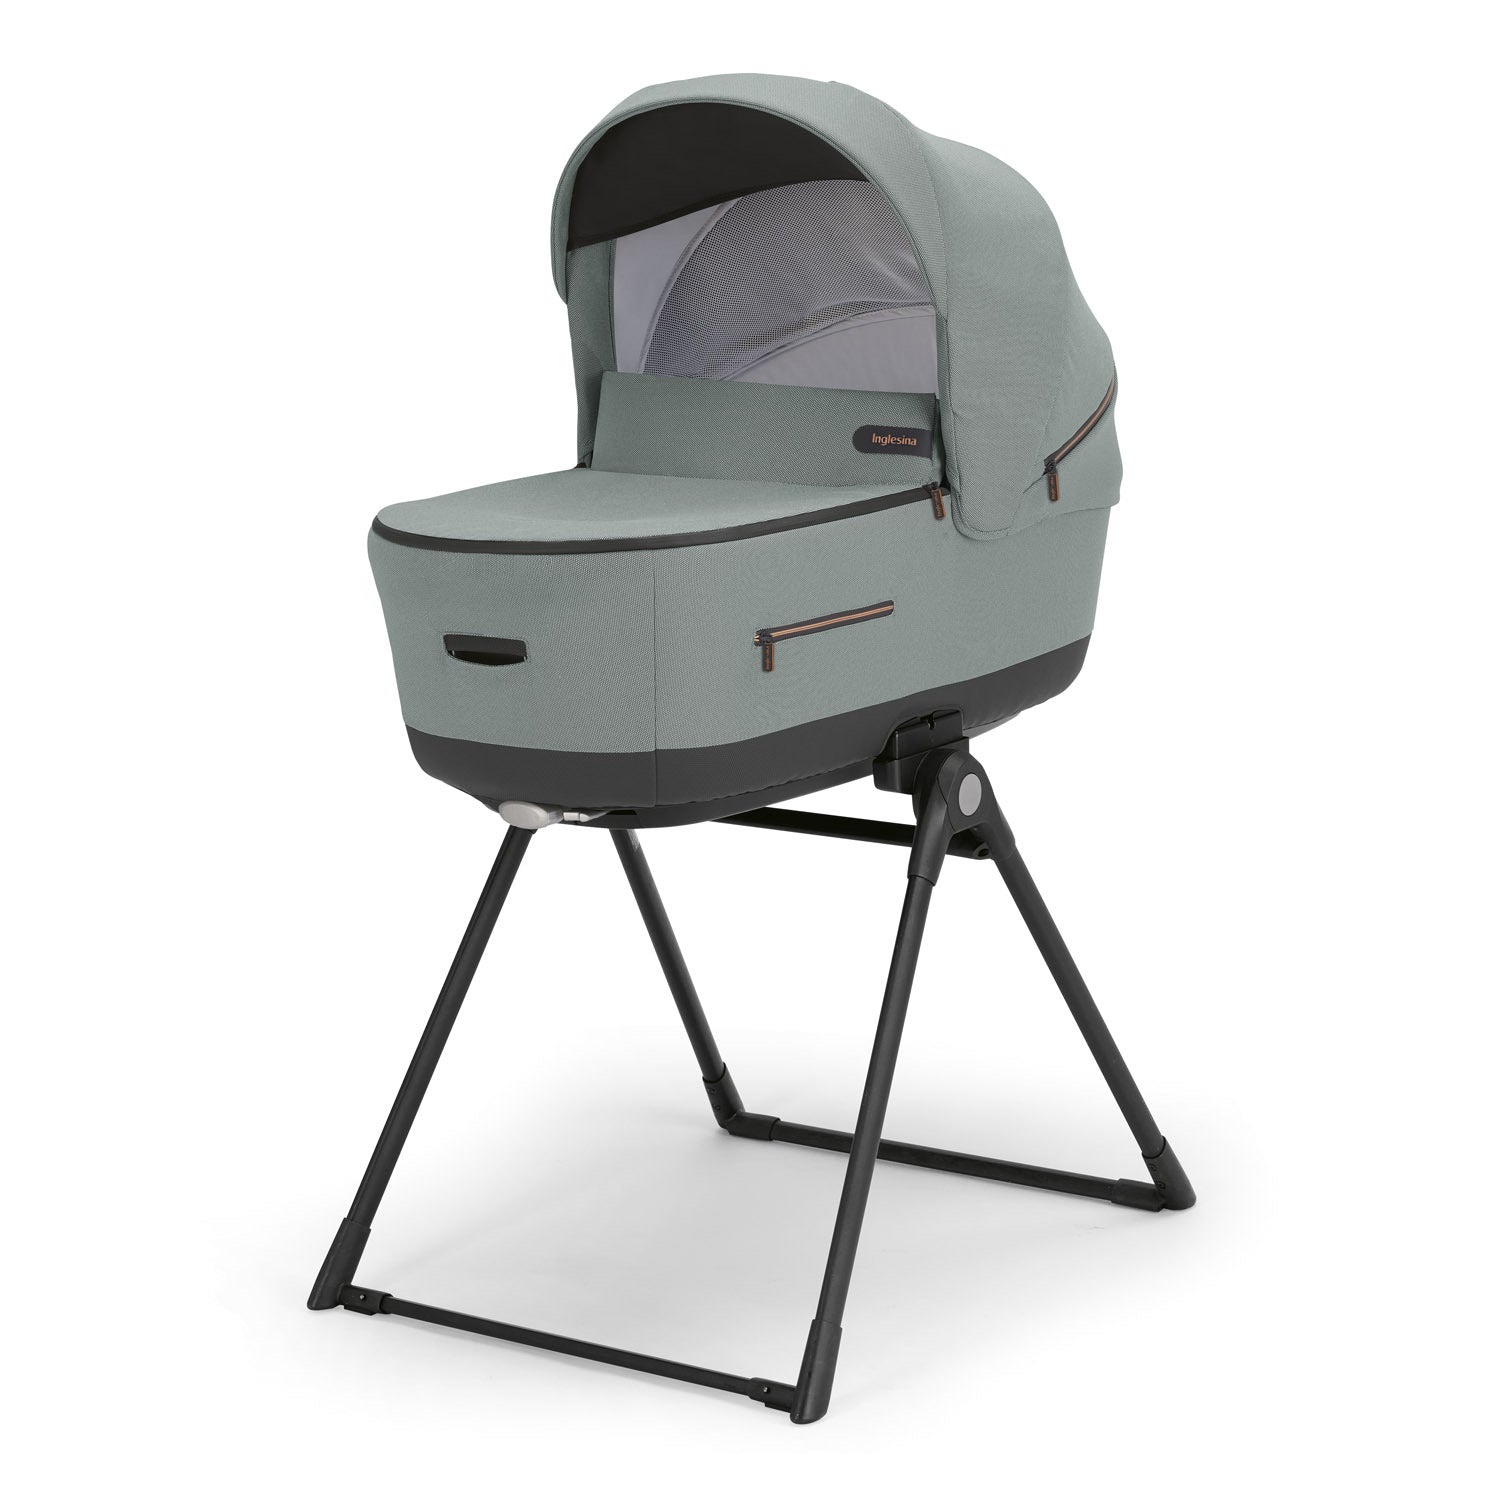 Aptica XT System Igloo Grey, Darwin Infant Recline car seat, 360° i-Size base, Black chassis